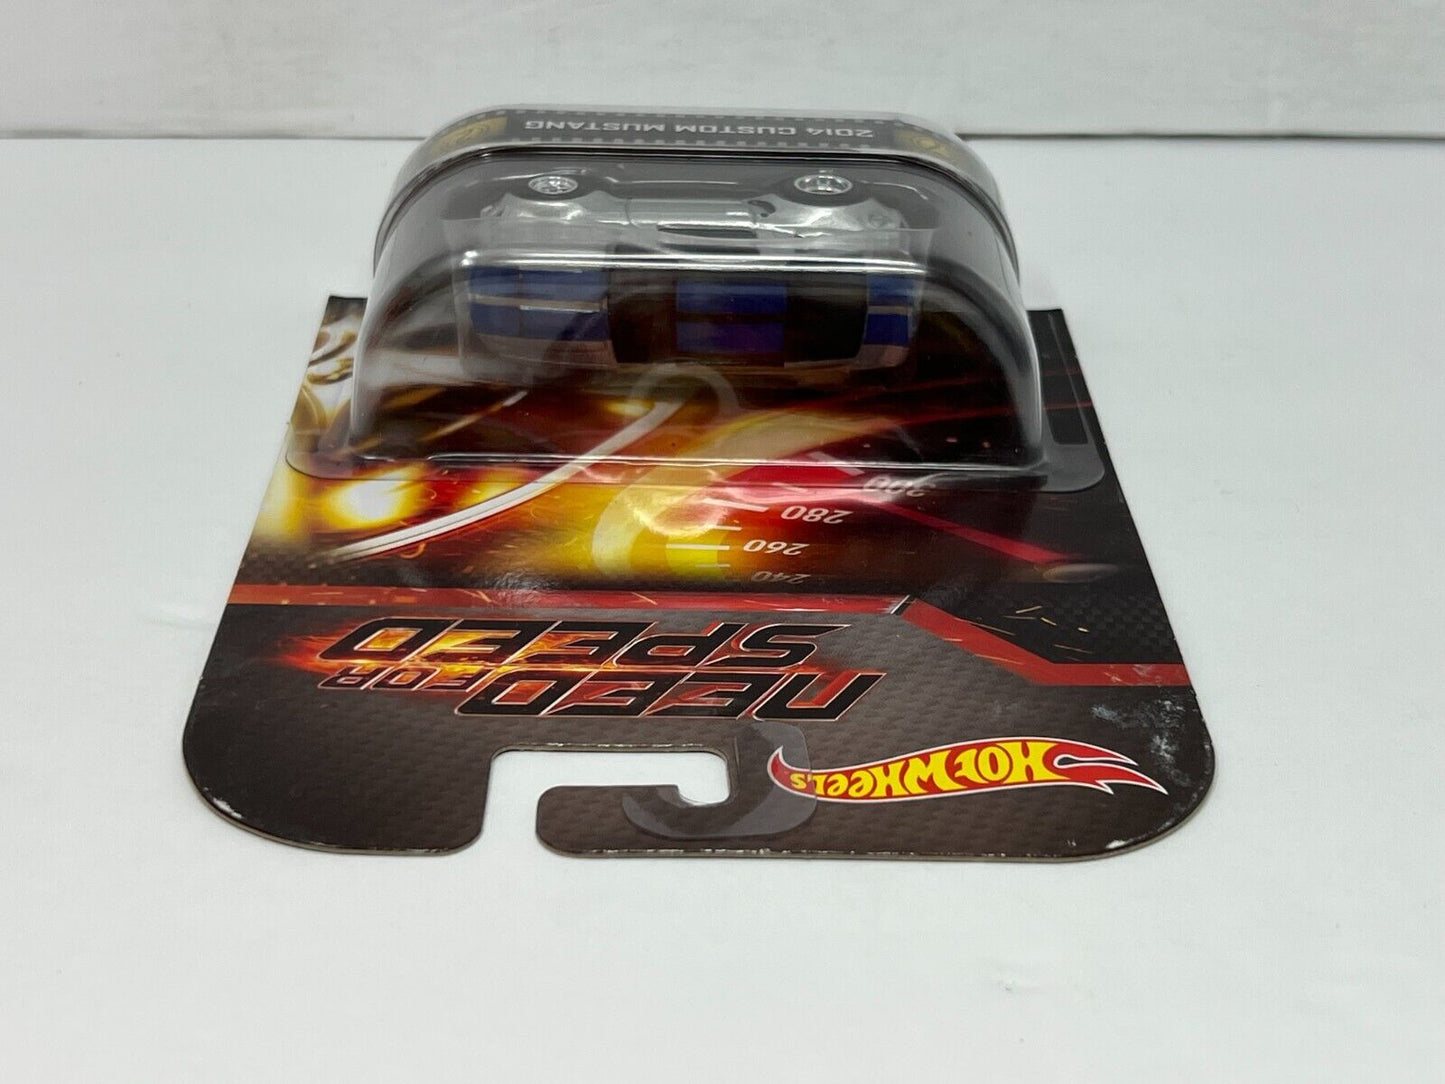 Hot Wheels Retro Entertainment Need for Speed 2014 Custom Mustang 1:64 Diecast